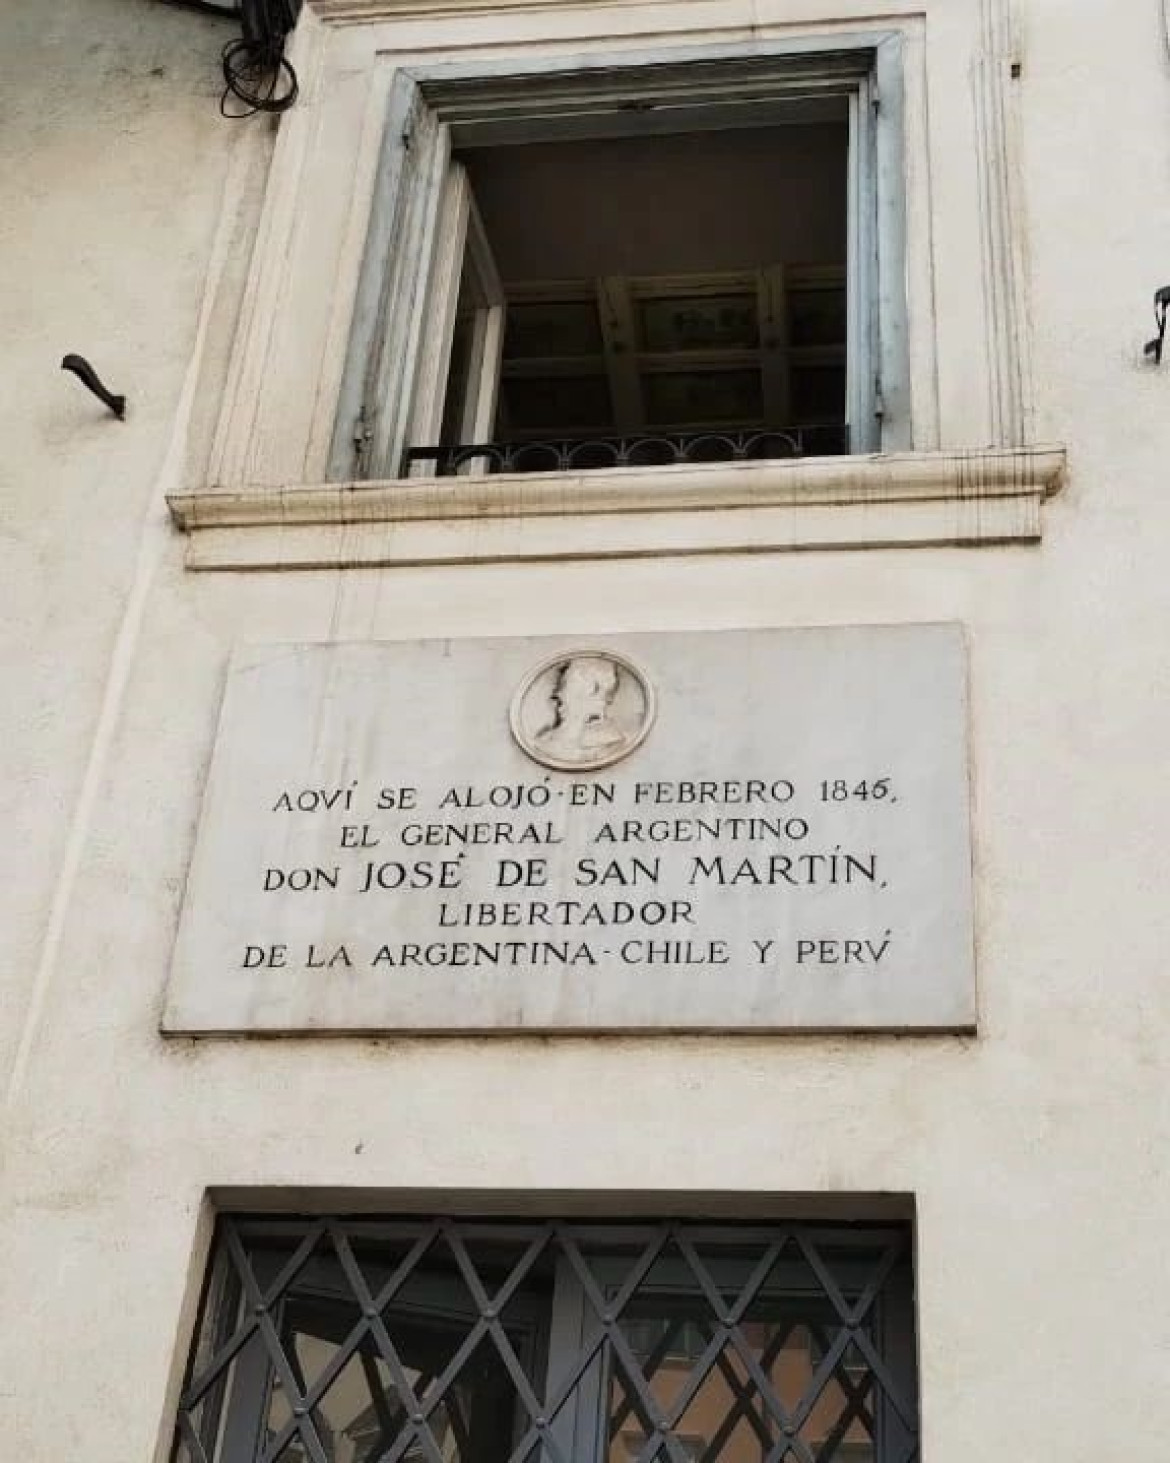 Hotel Minerva donde se alojó San Martín en Roma. Foto: Instagram @dehistoriasomos